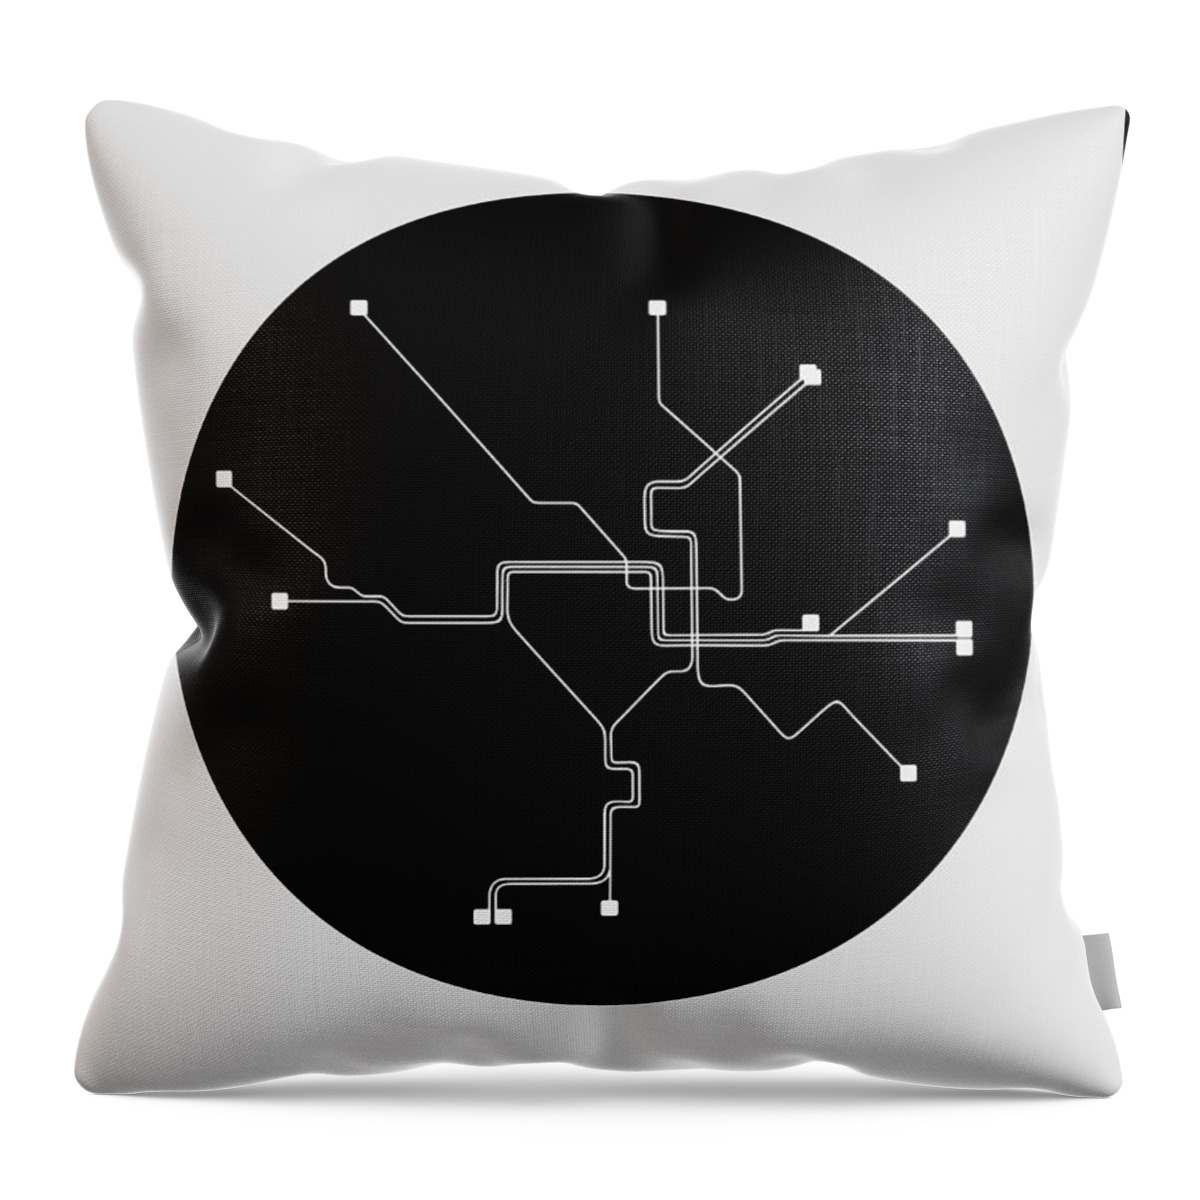 Washington D.c. Throw Pillow featuring the digital art Washington D.C. Black Subway Map by Naxart Studio